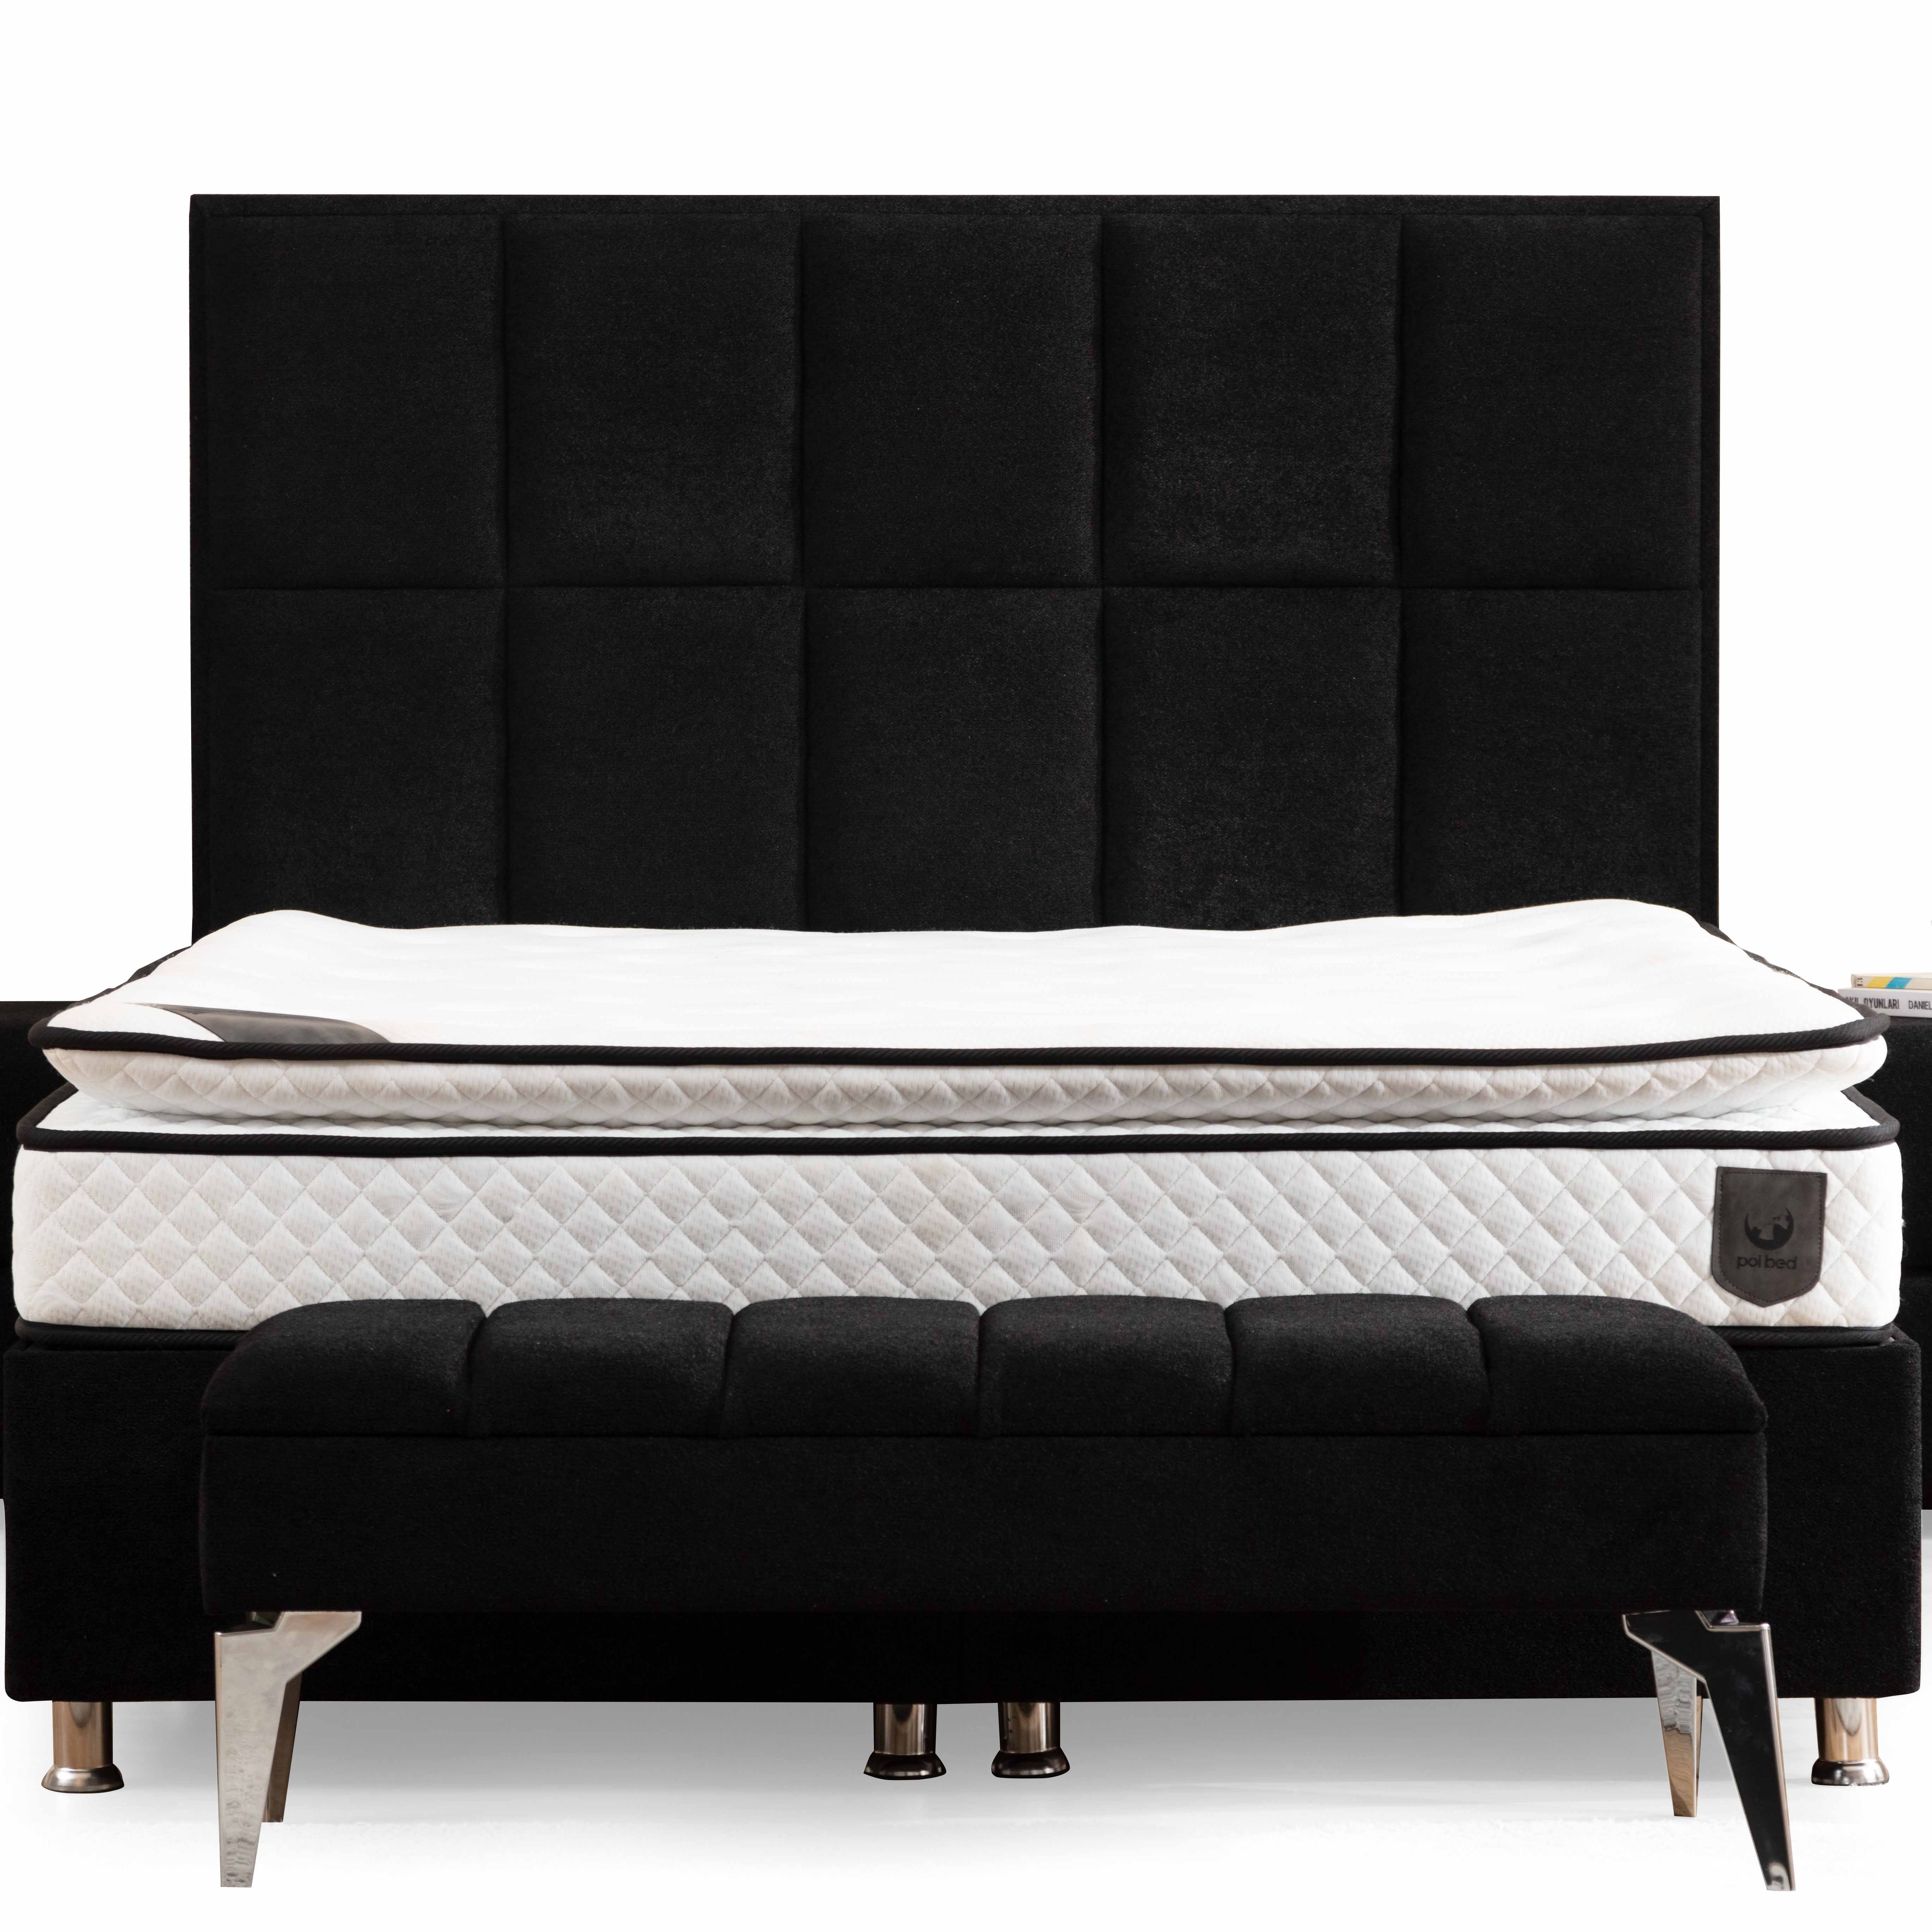 Lovita Bed With Storage 180x200 cm